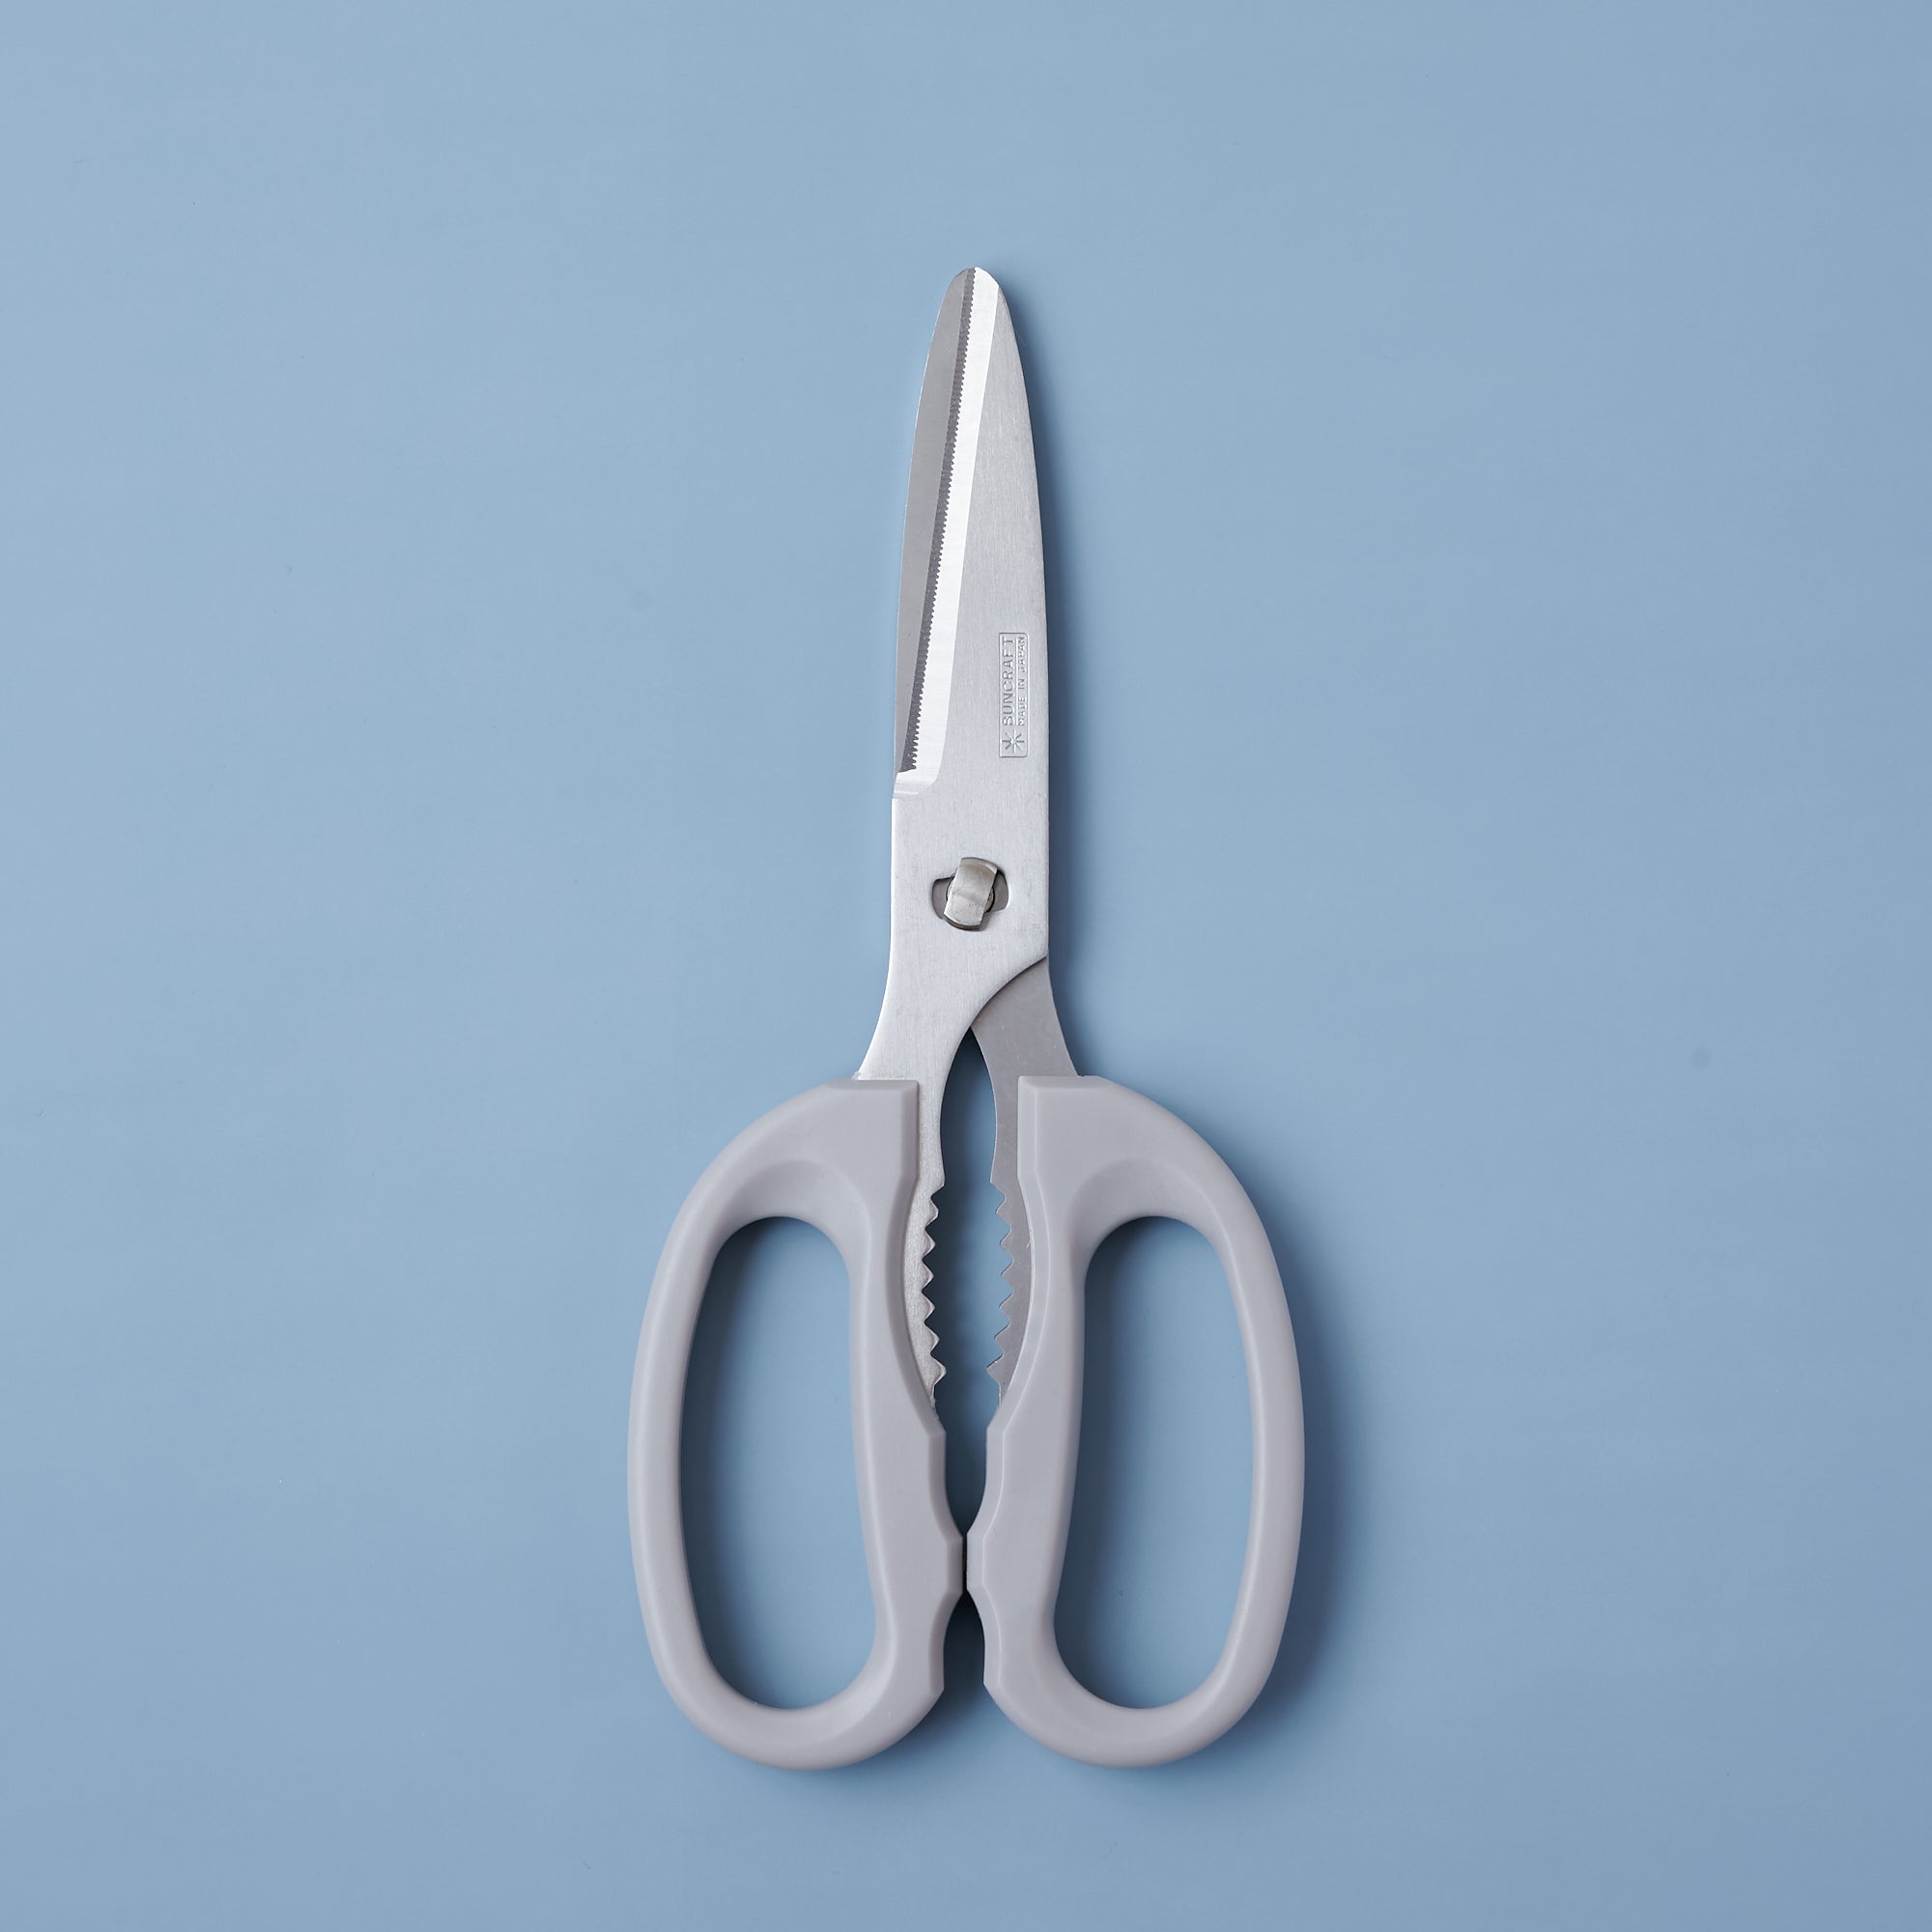 Image of kitchen scissors for left hand